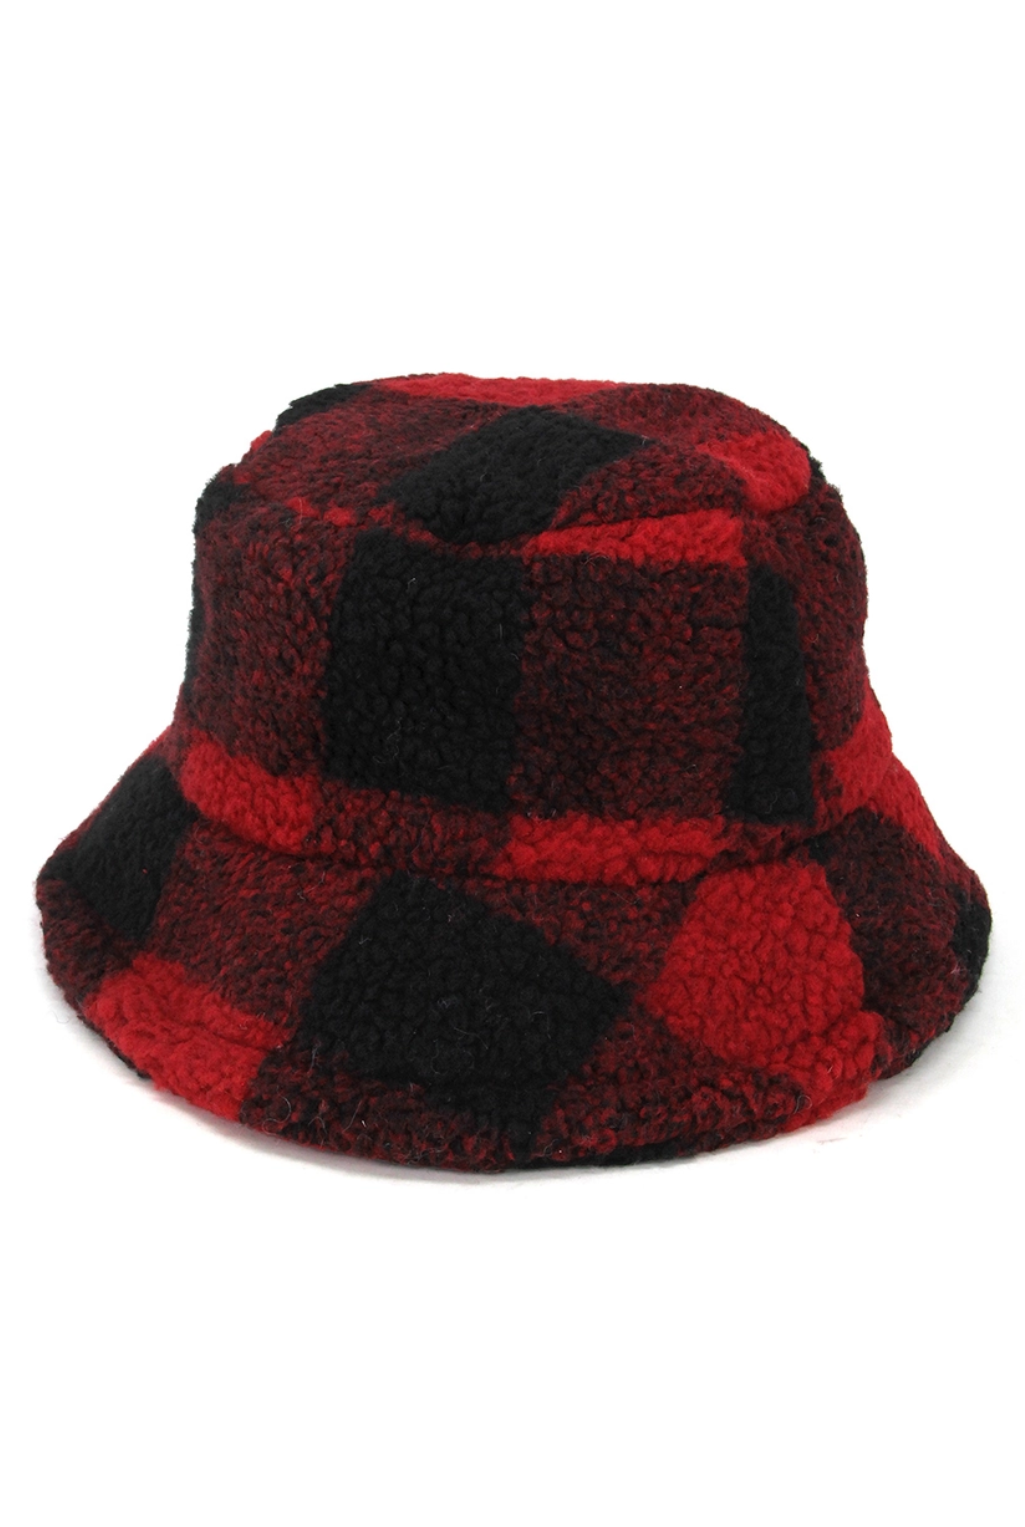 Plaid Bucket Hat - Red/Black